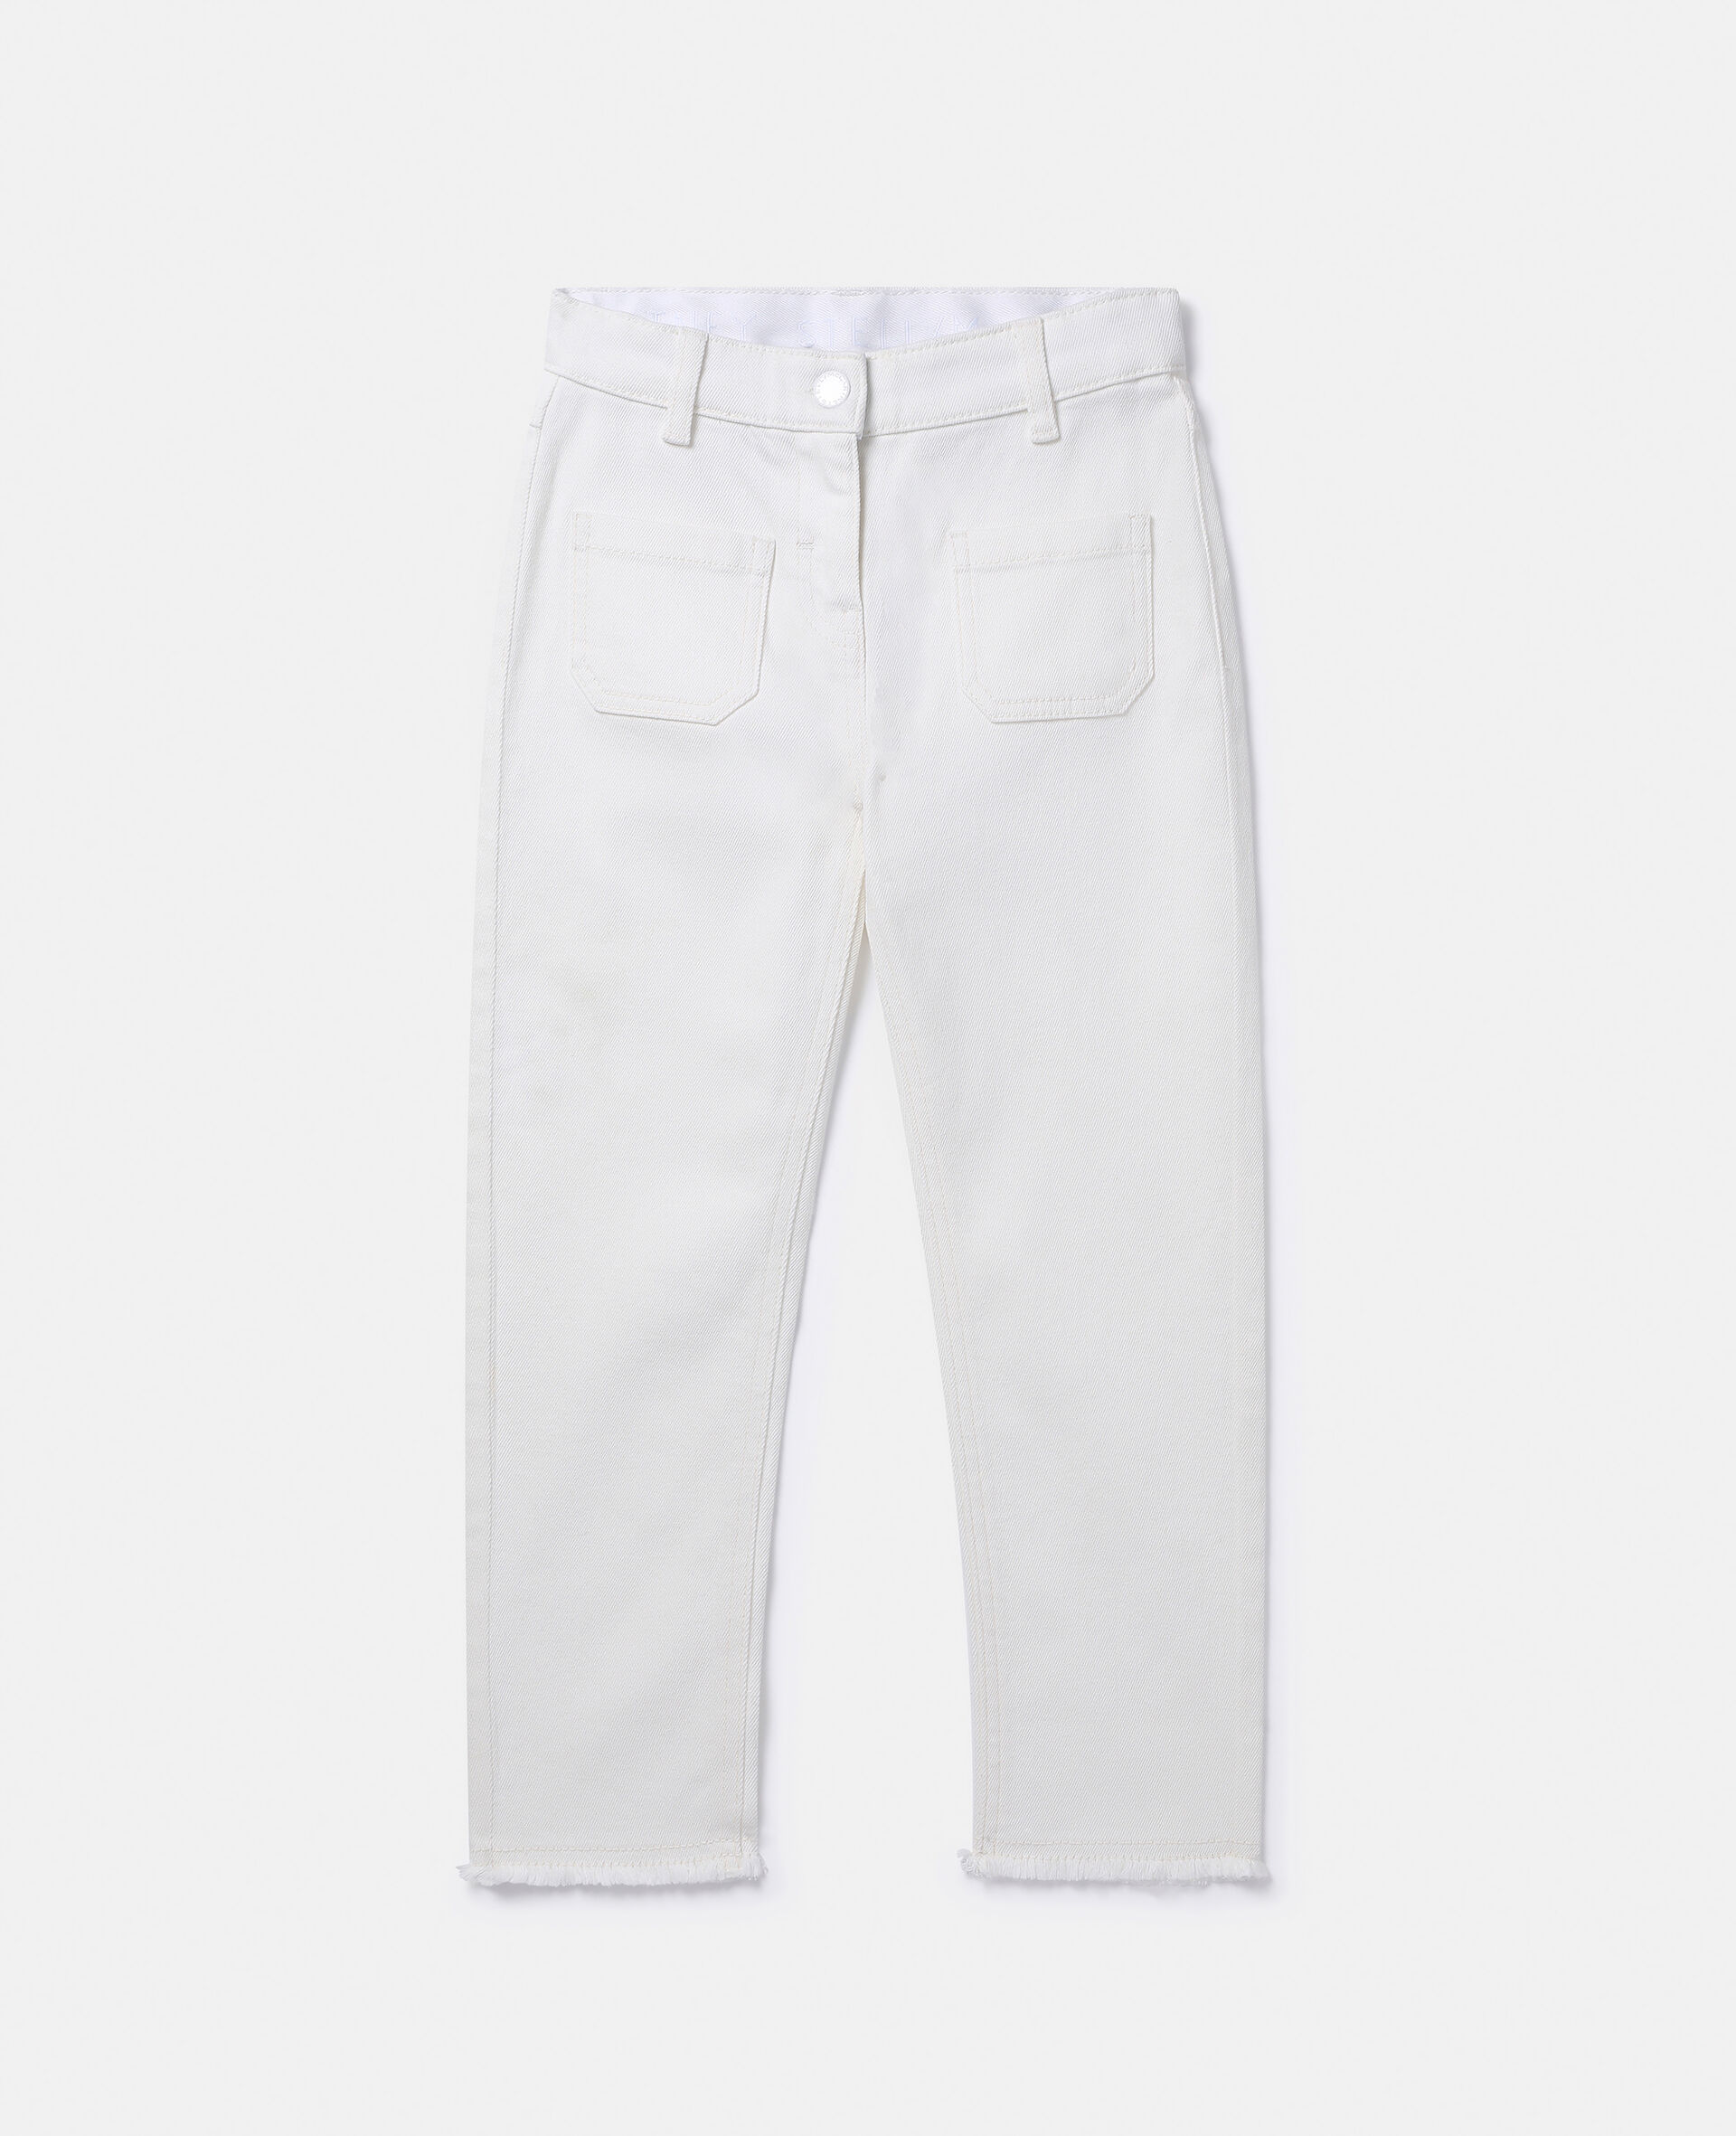 Patch Pocket Straight Leg Jeans-Cream-medium